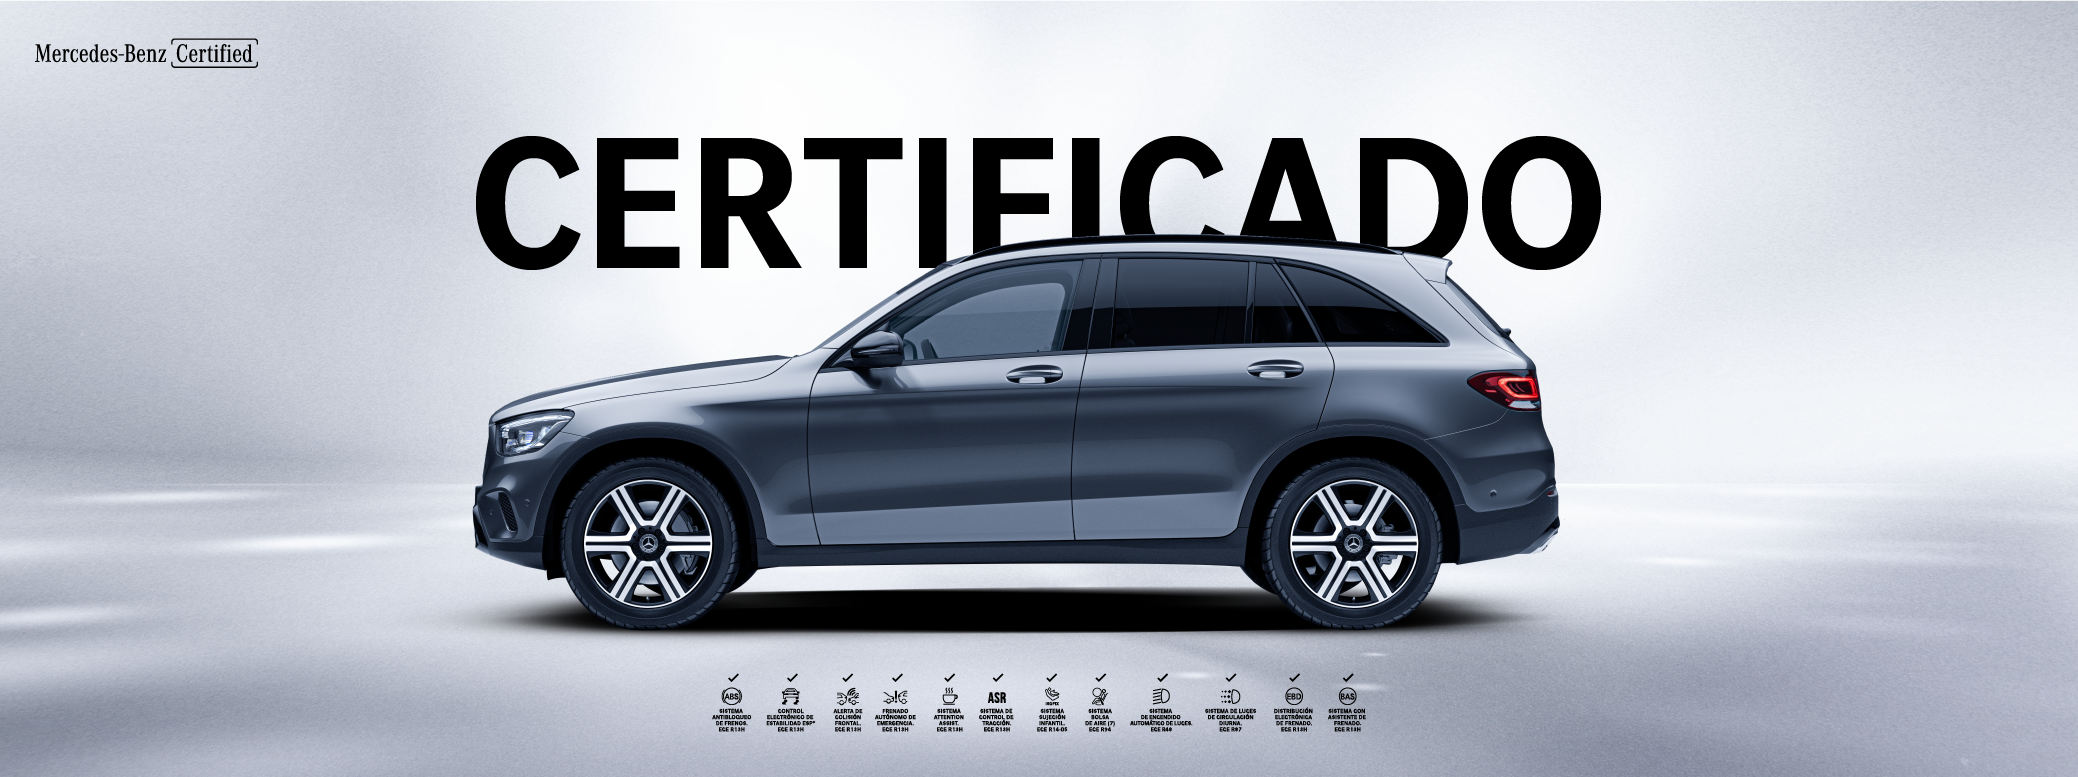 Usado Certificado Mercedes-Benz